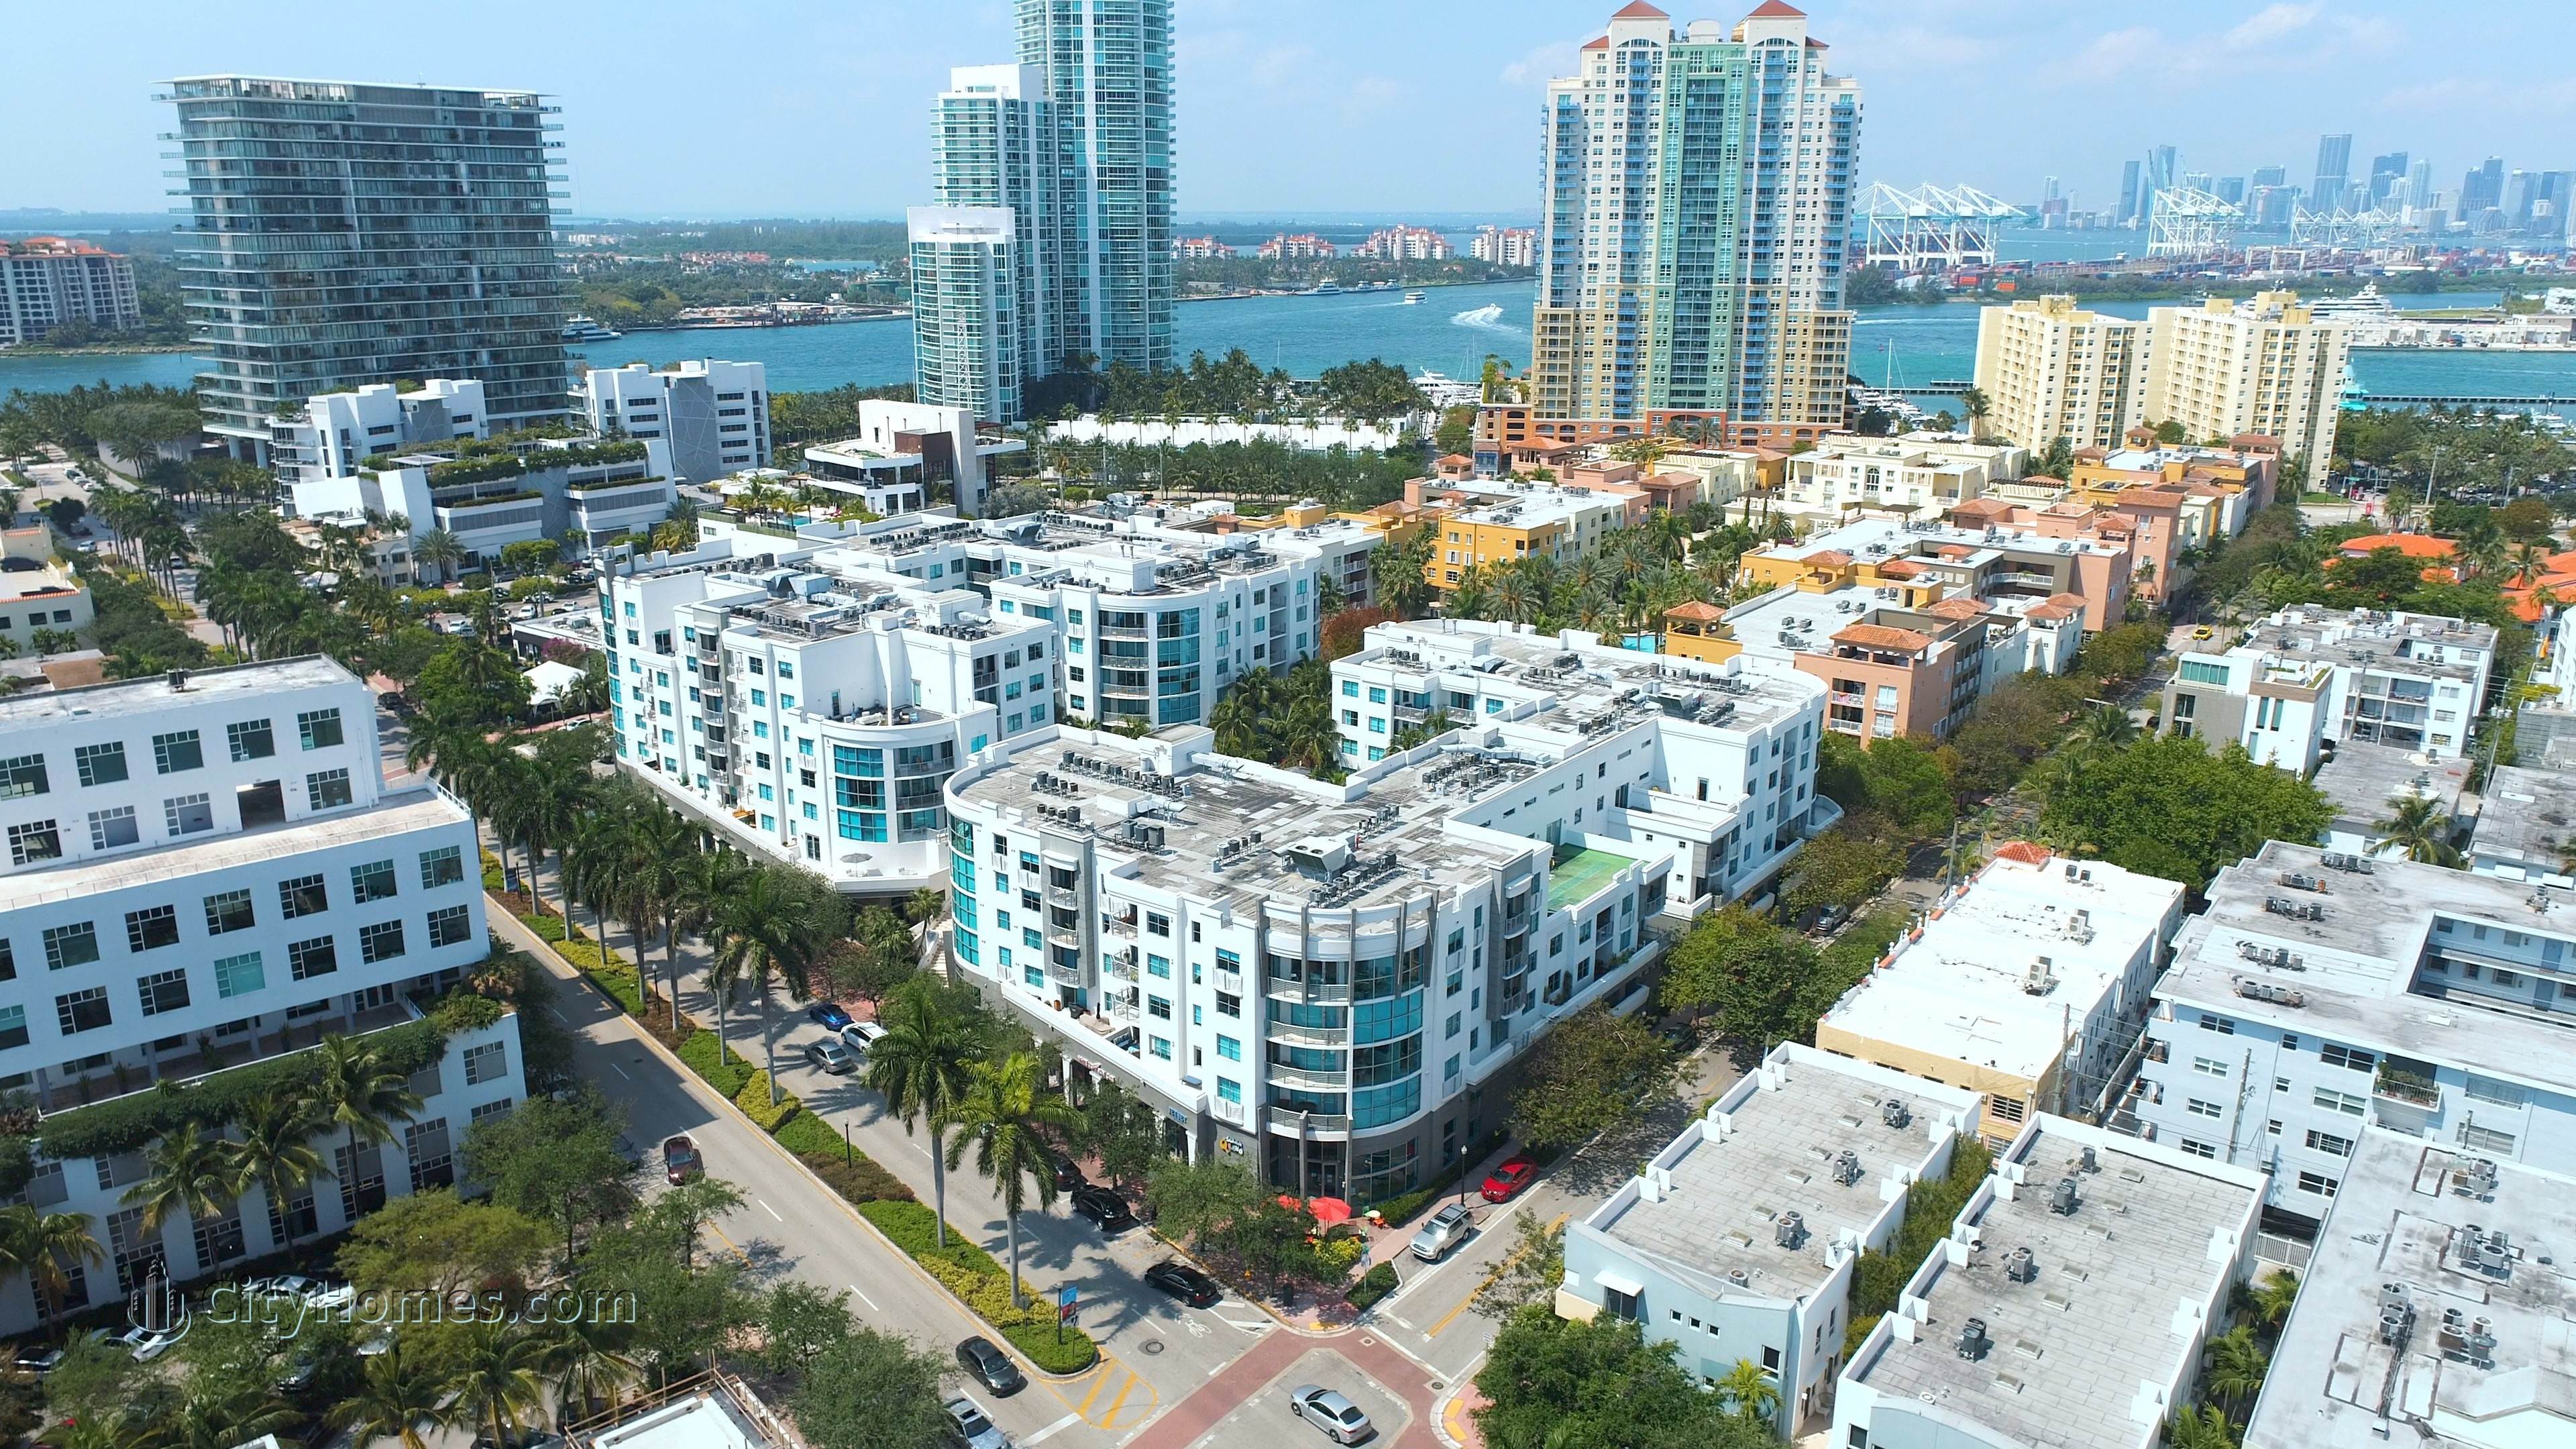 3. 110 Washington Ave, South of Fifth, Miami Beach, FL 33139에 COSMOPOLITAN TOWERS 건물